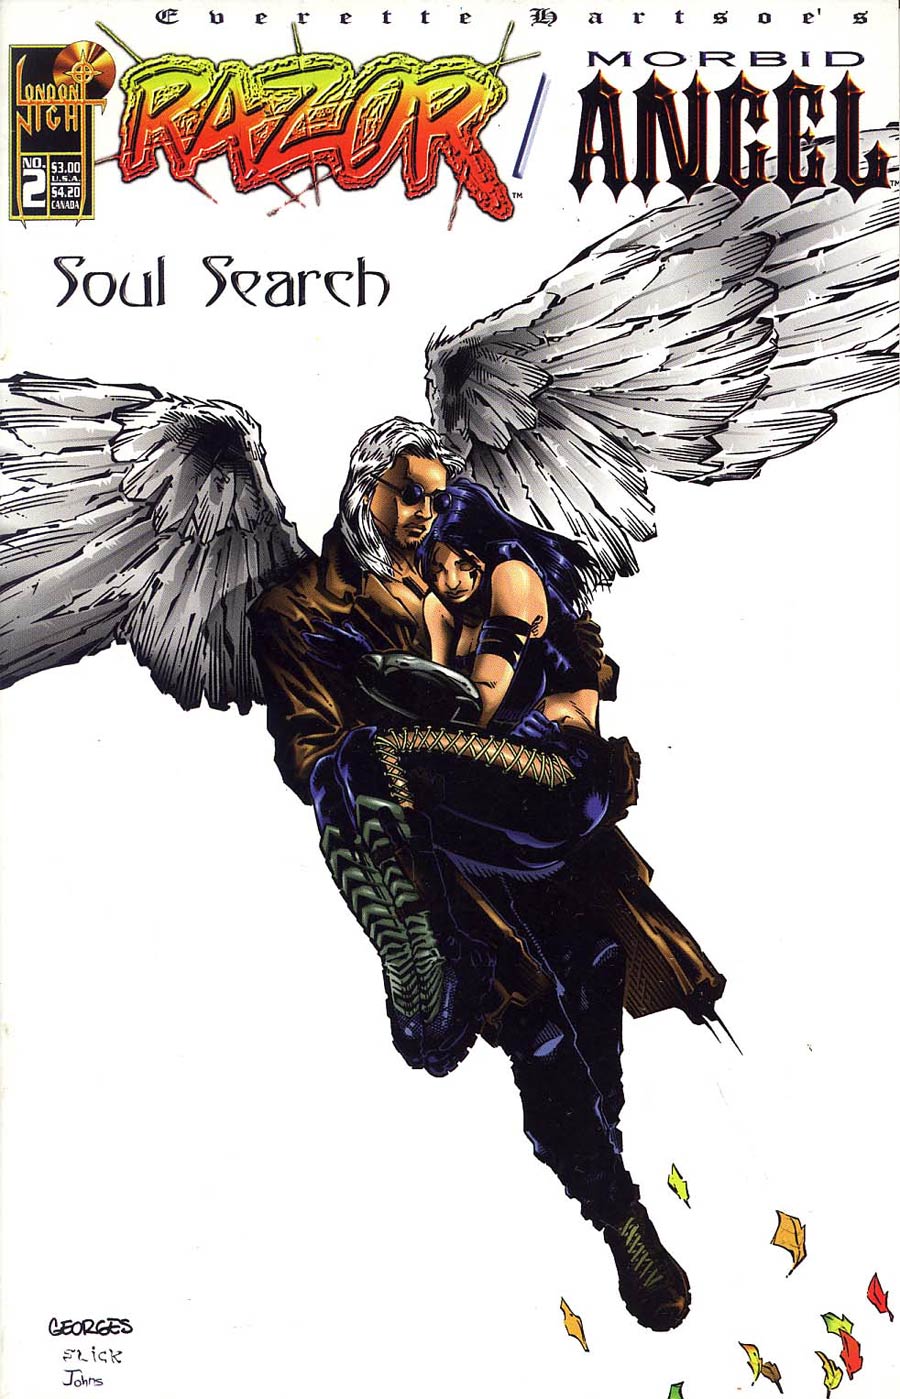 Razor Morbid Angel Soul Search #2